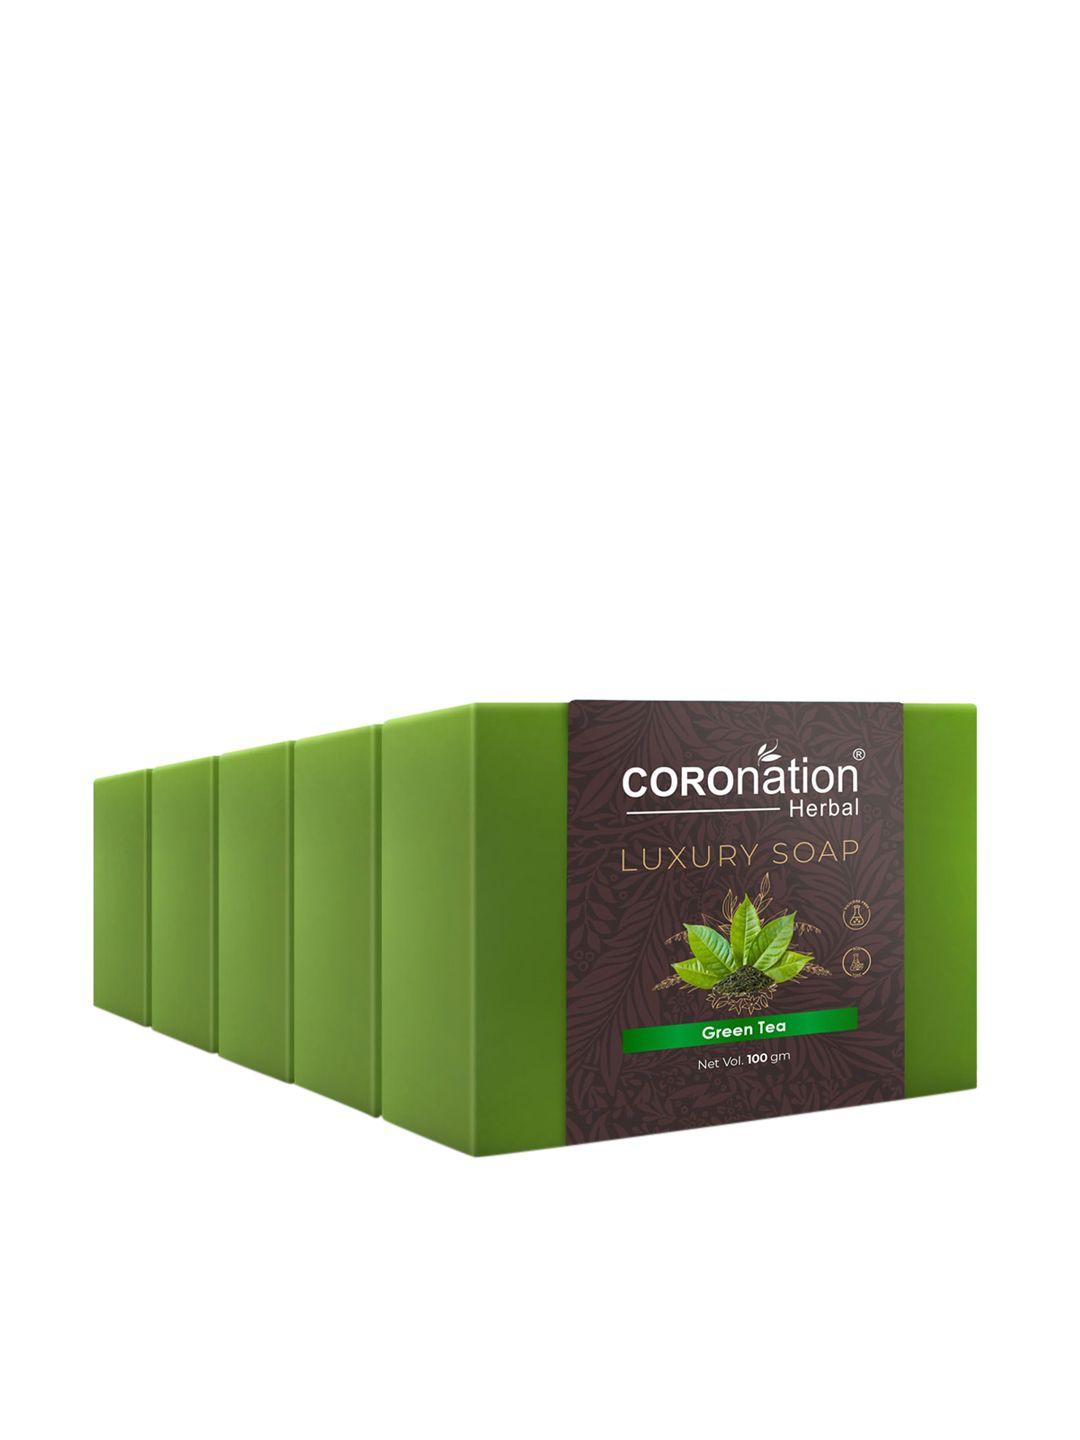 coronation herbal set of 5 green tea luxury soaps - 100 g each